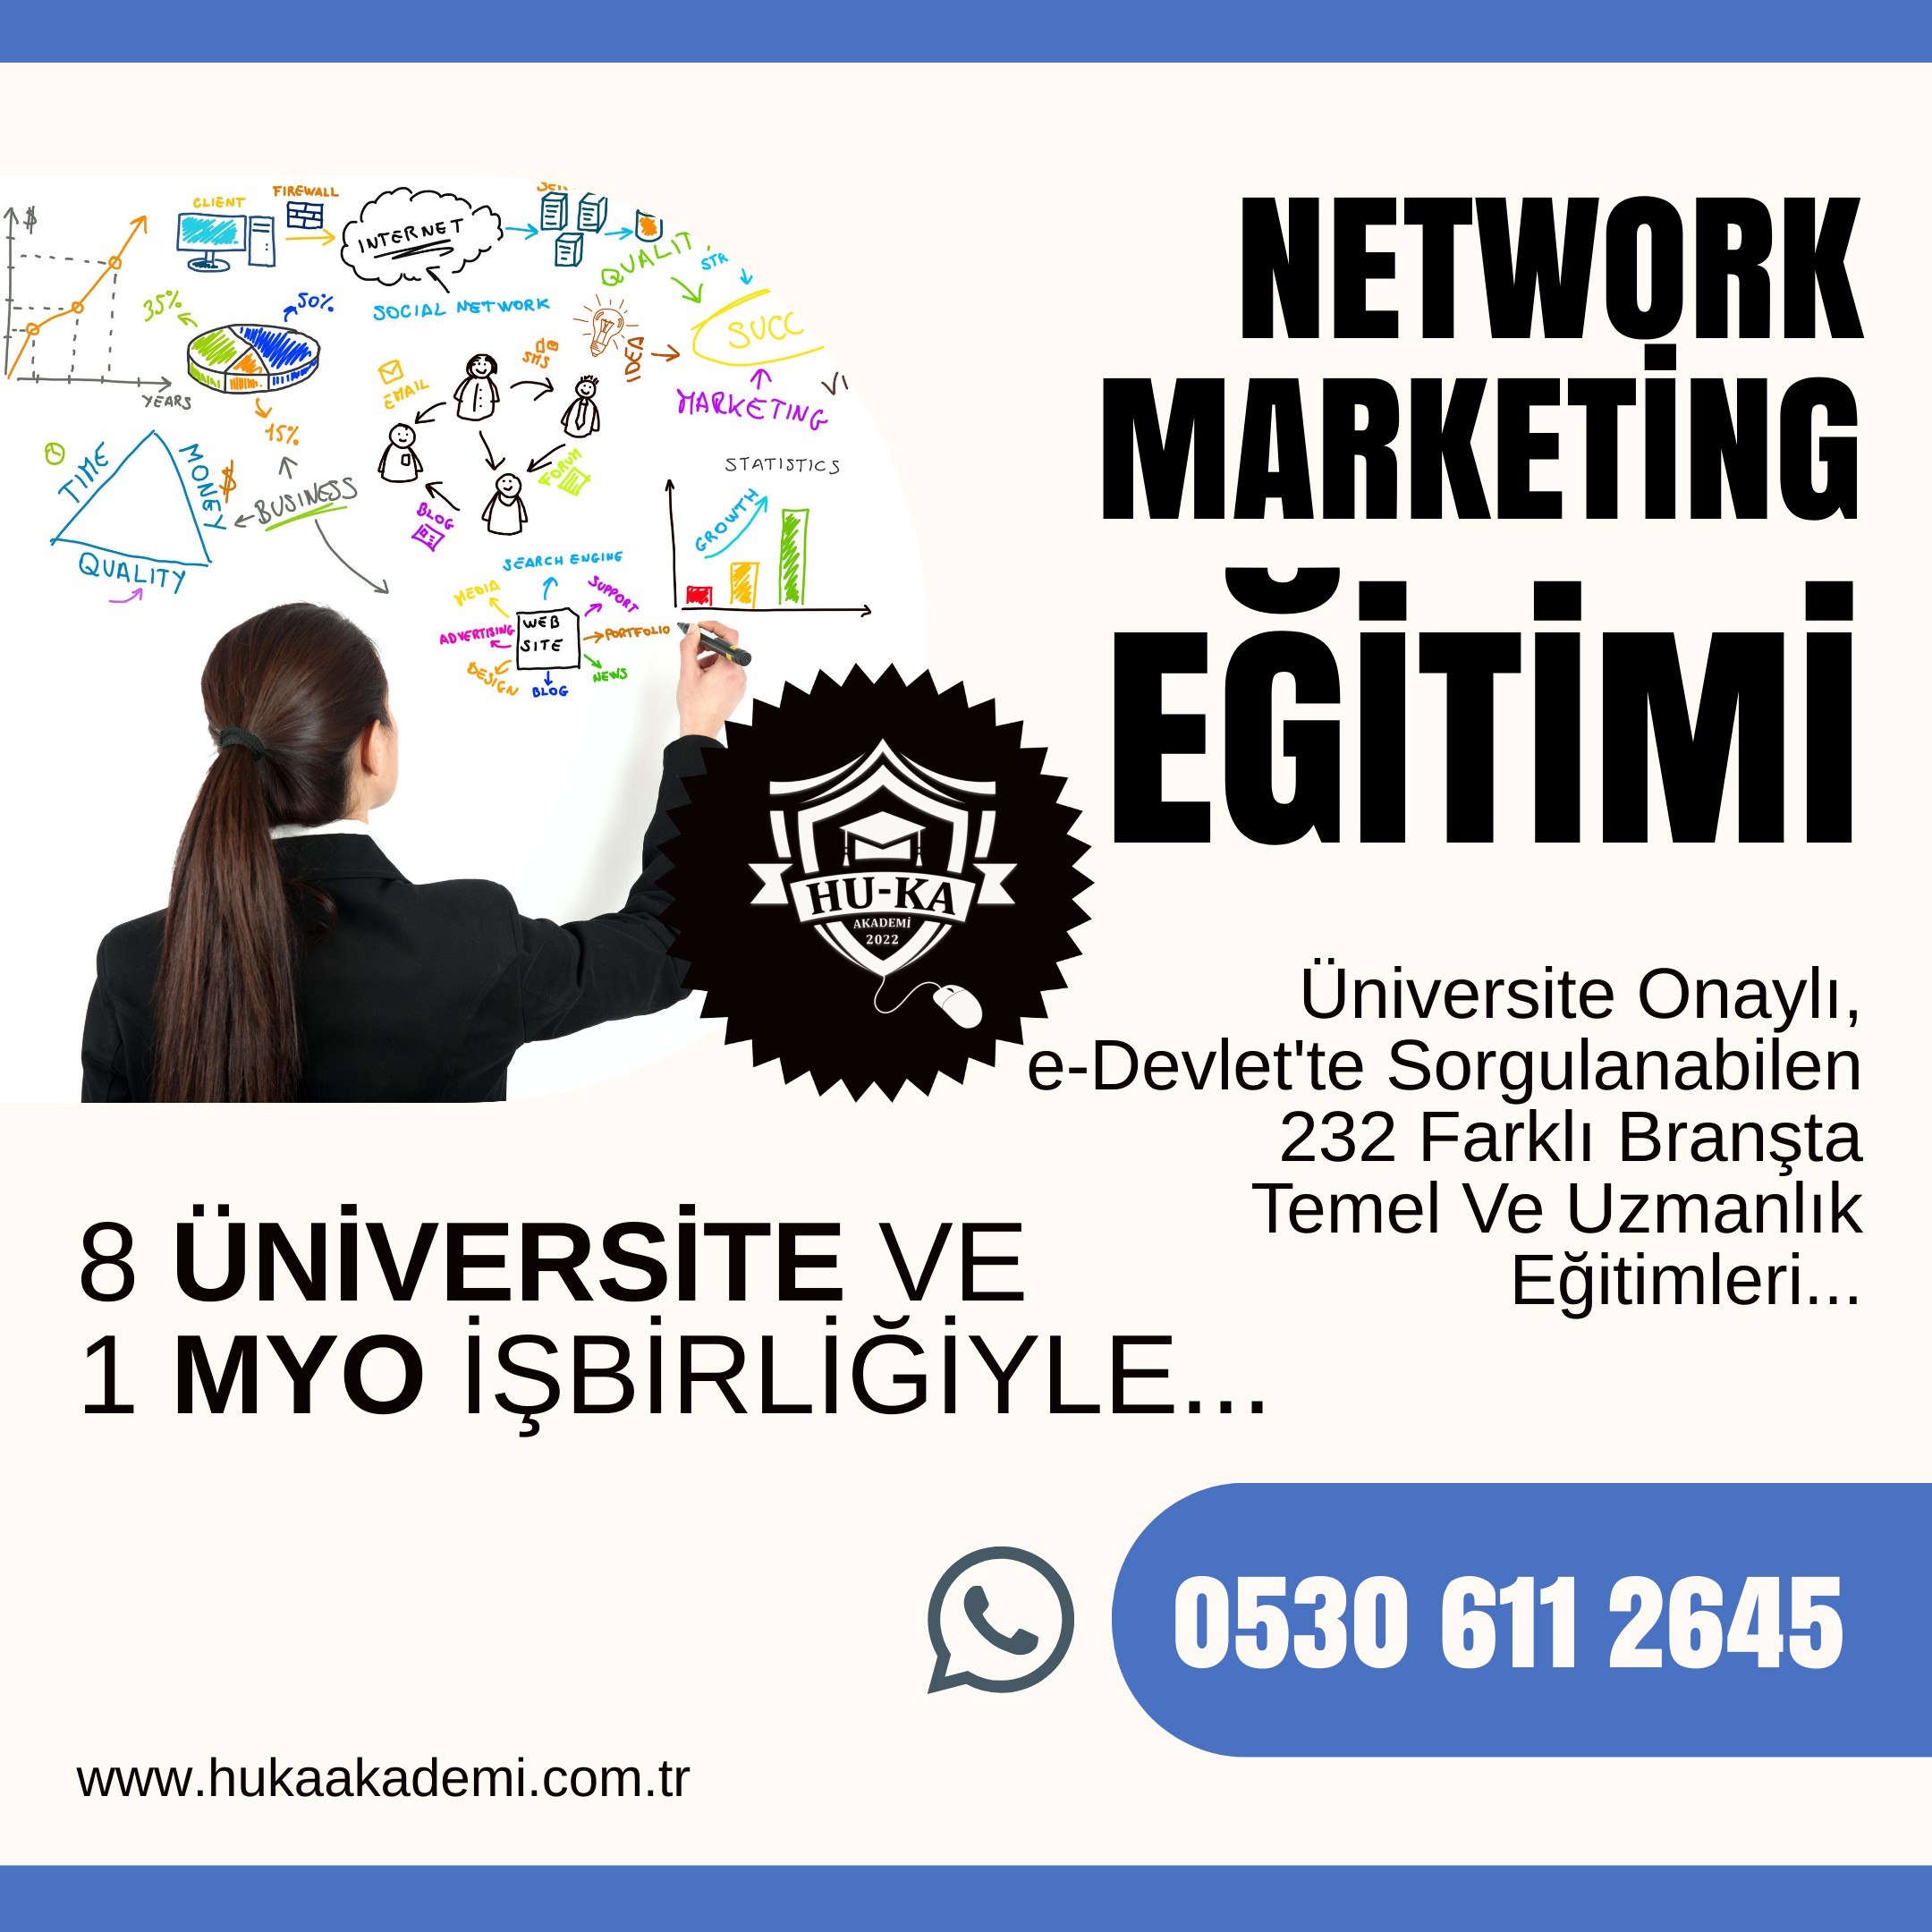 Network Marketing Online Eğitimi